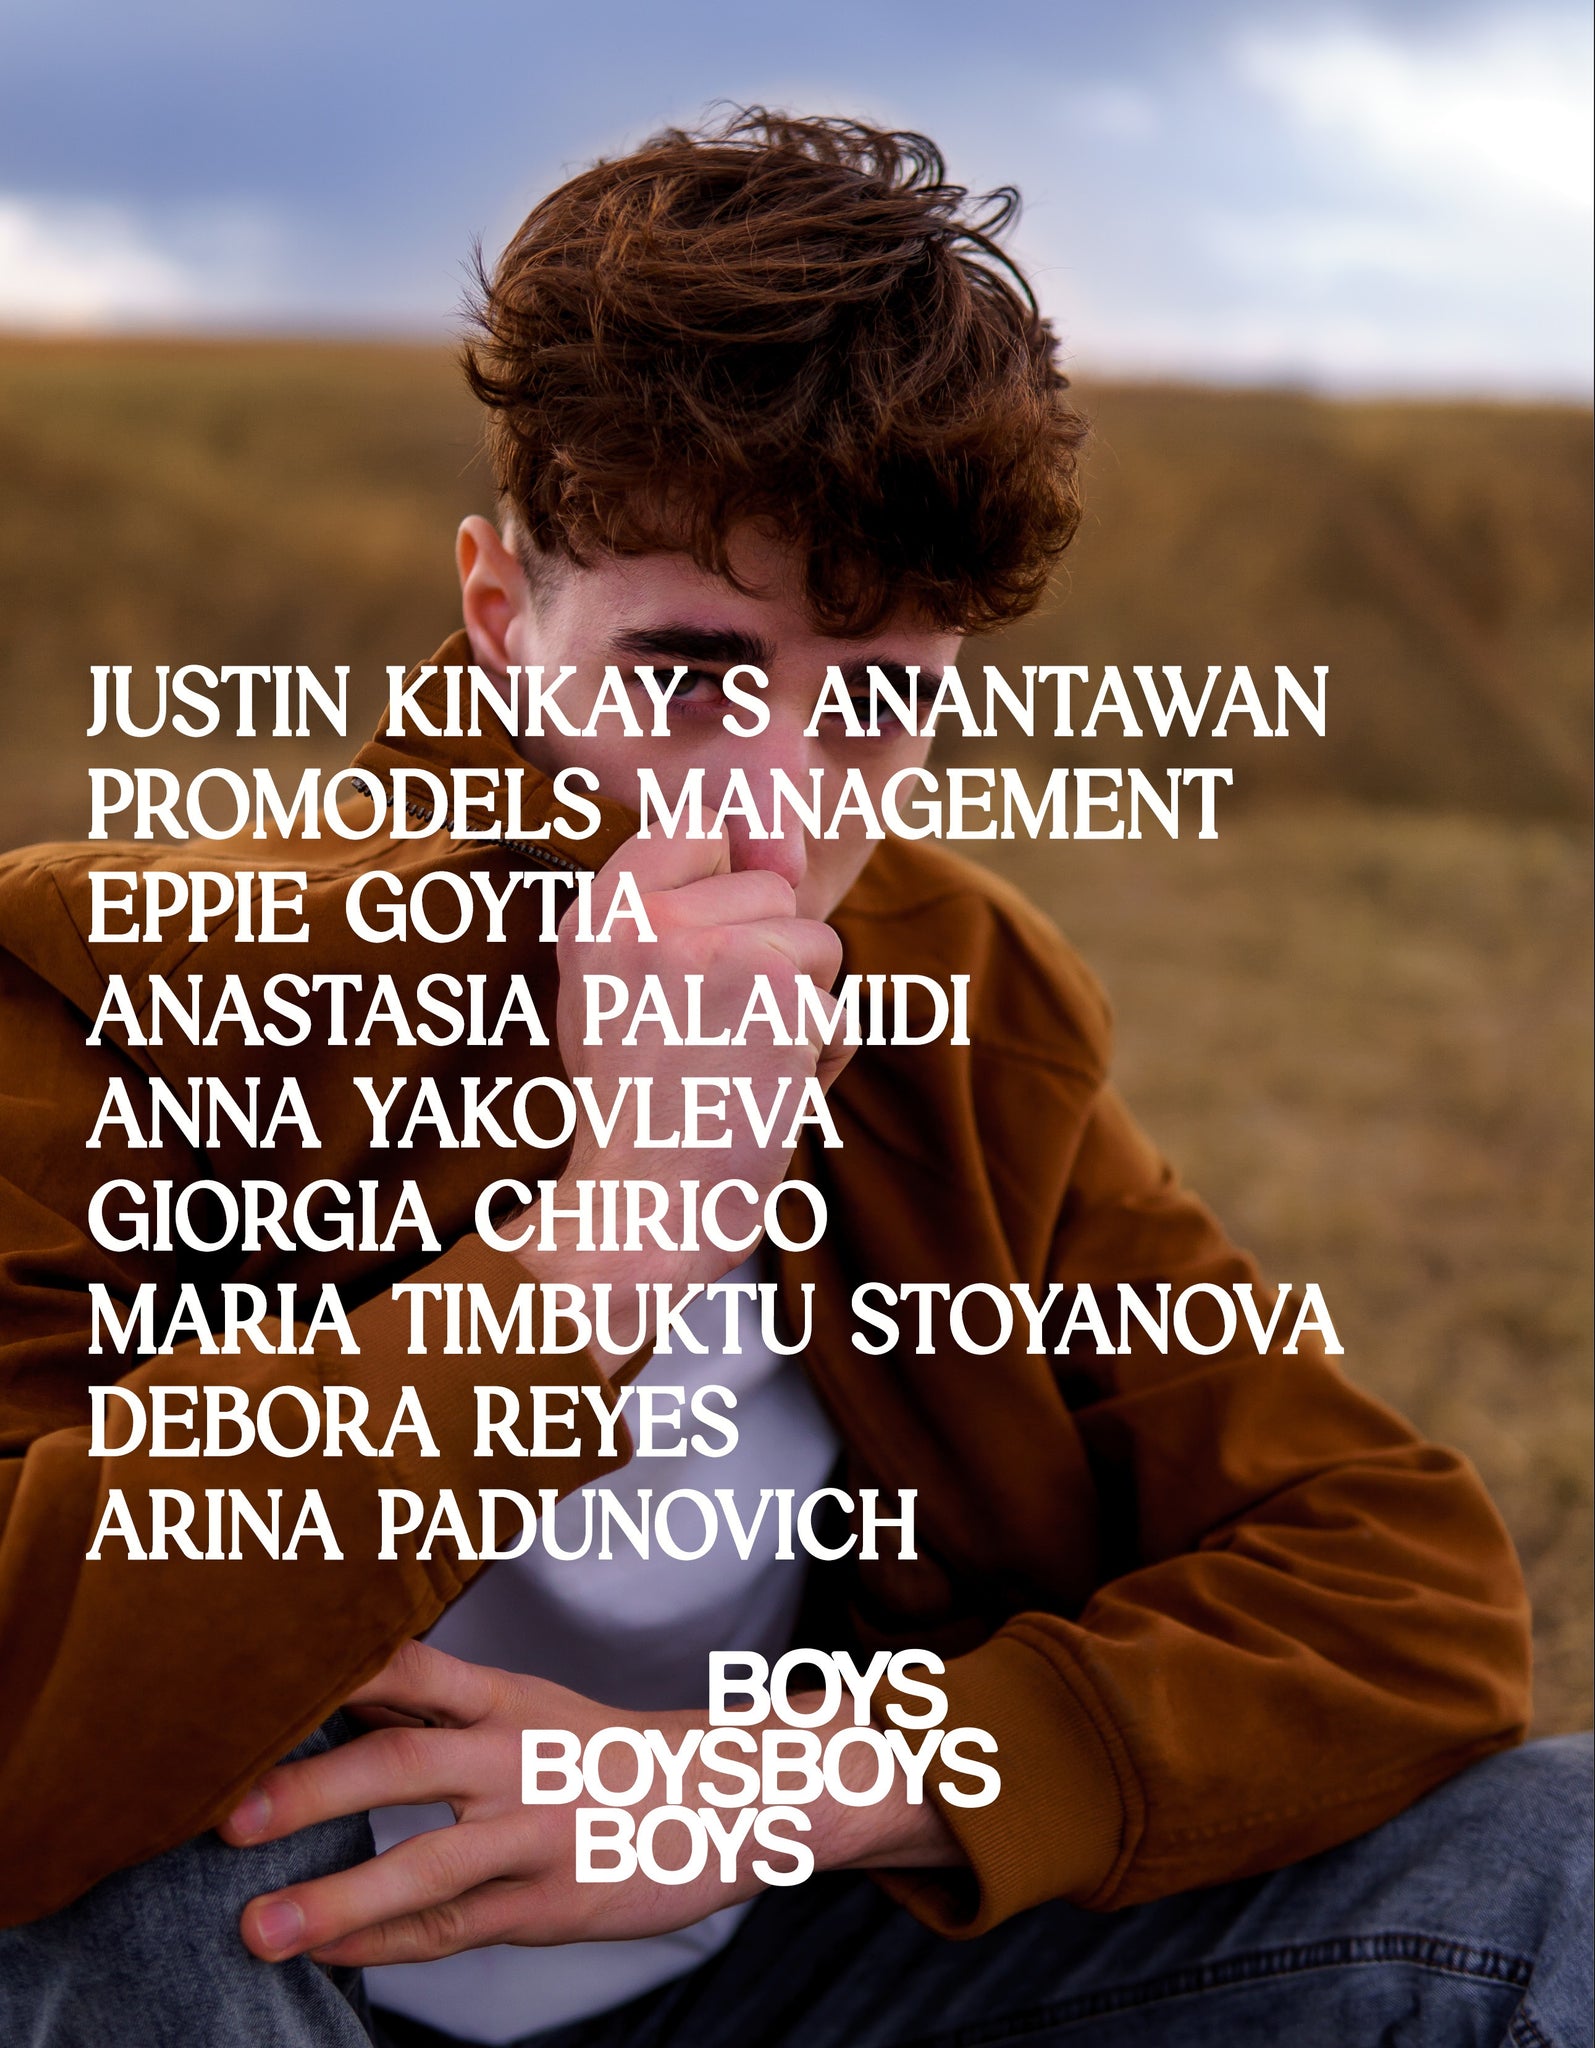 BOYS BOYS BOYS BOYS | VOLUME TWENTY FIVE | ISSUE #19